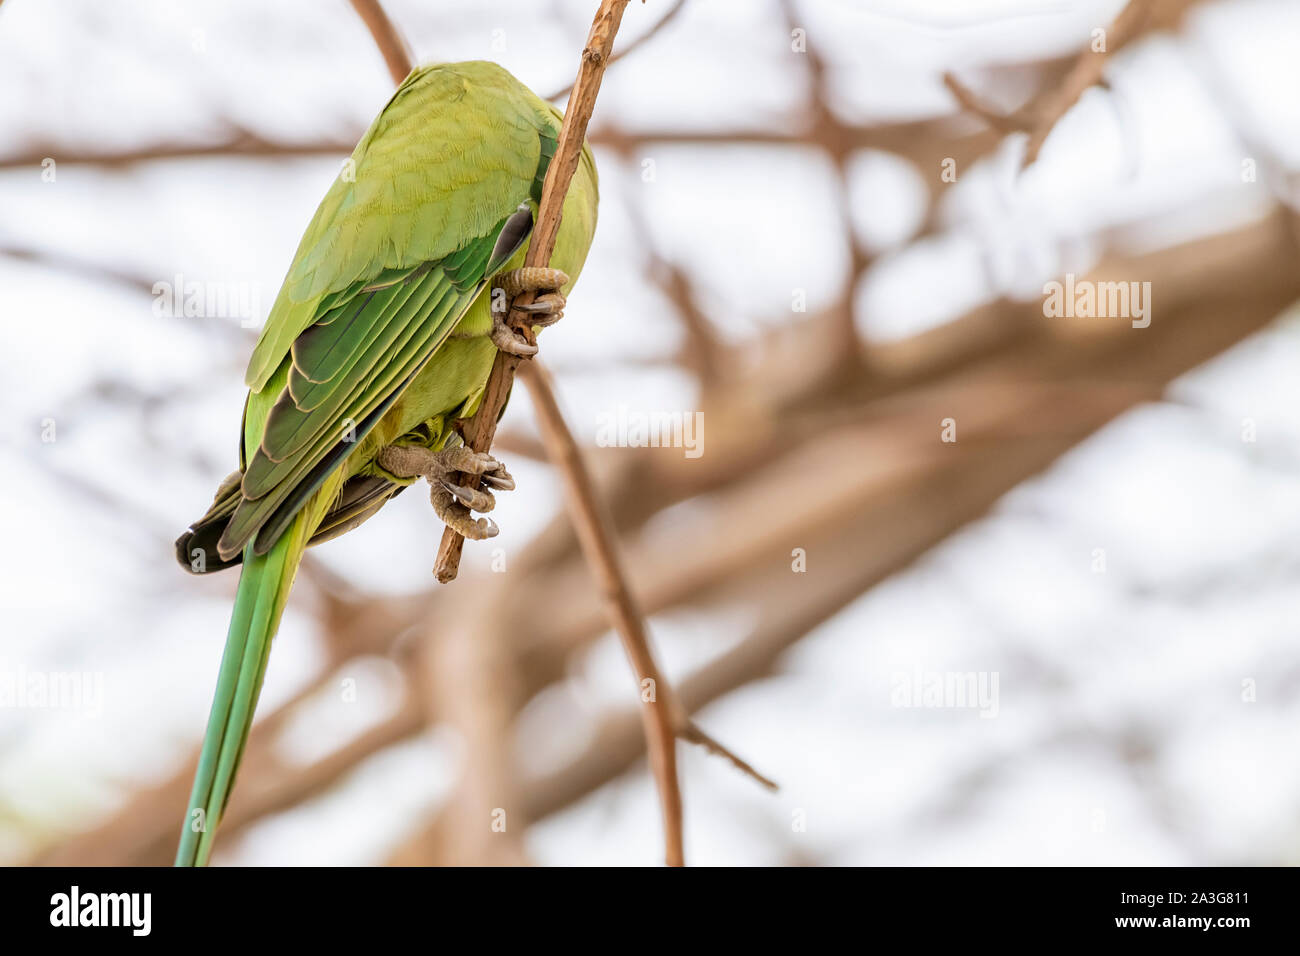 Rose-ringed Parakeet (medium size green Parrot) legs and feet Stock Photo